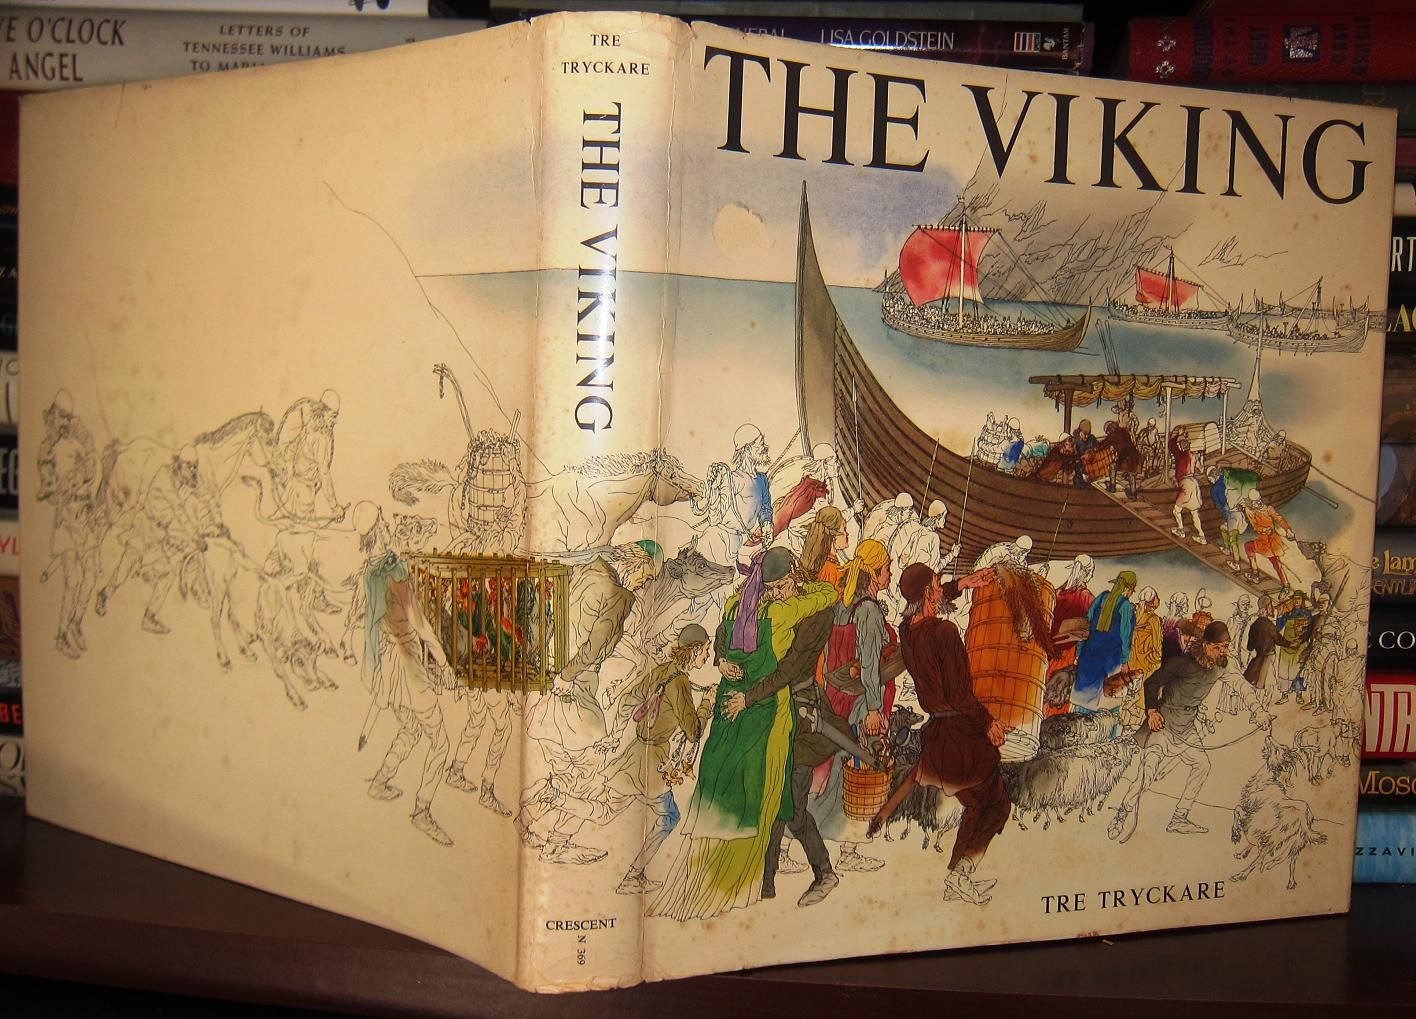 TRE TRYCKARE - The Viking